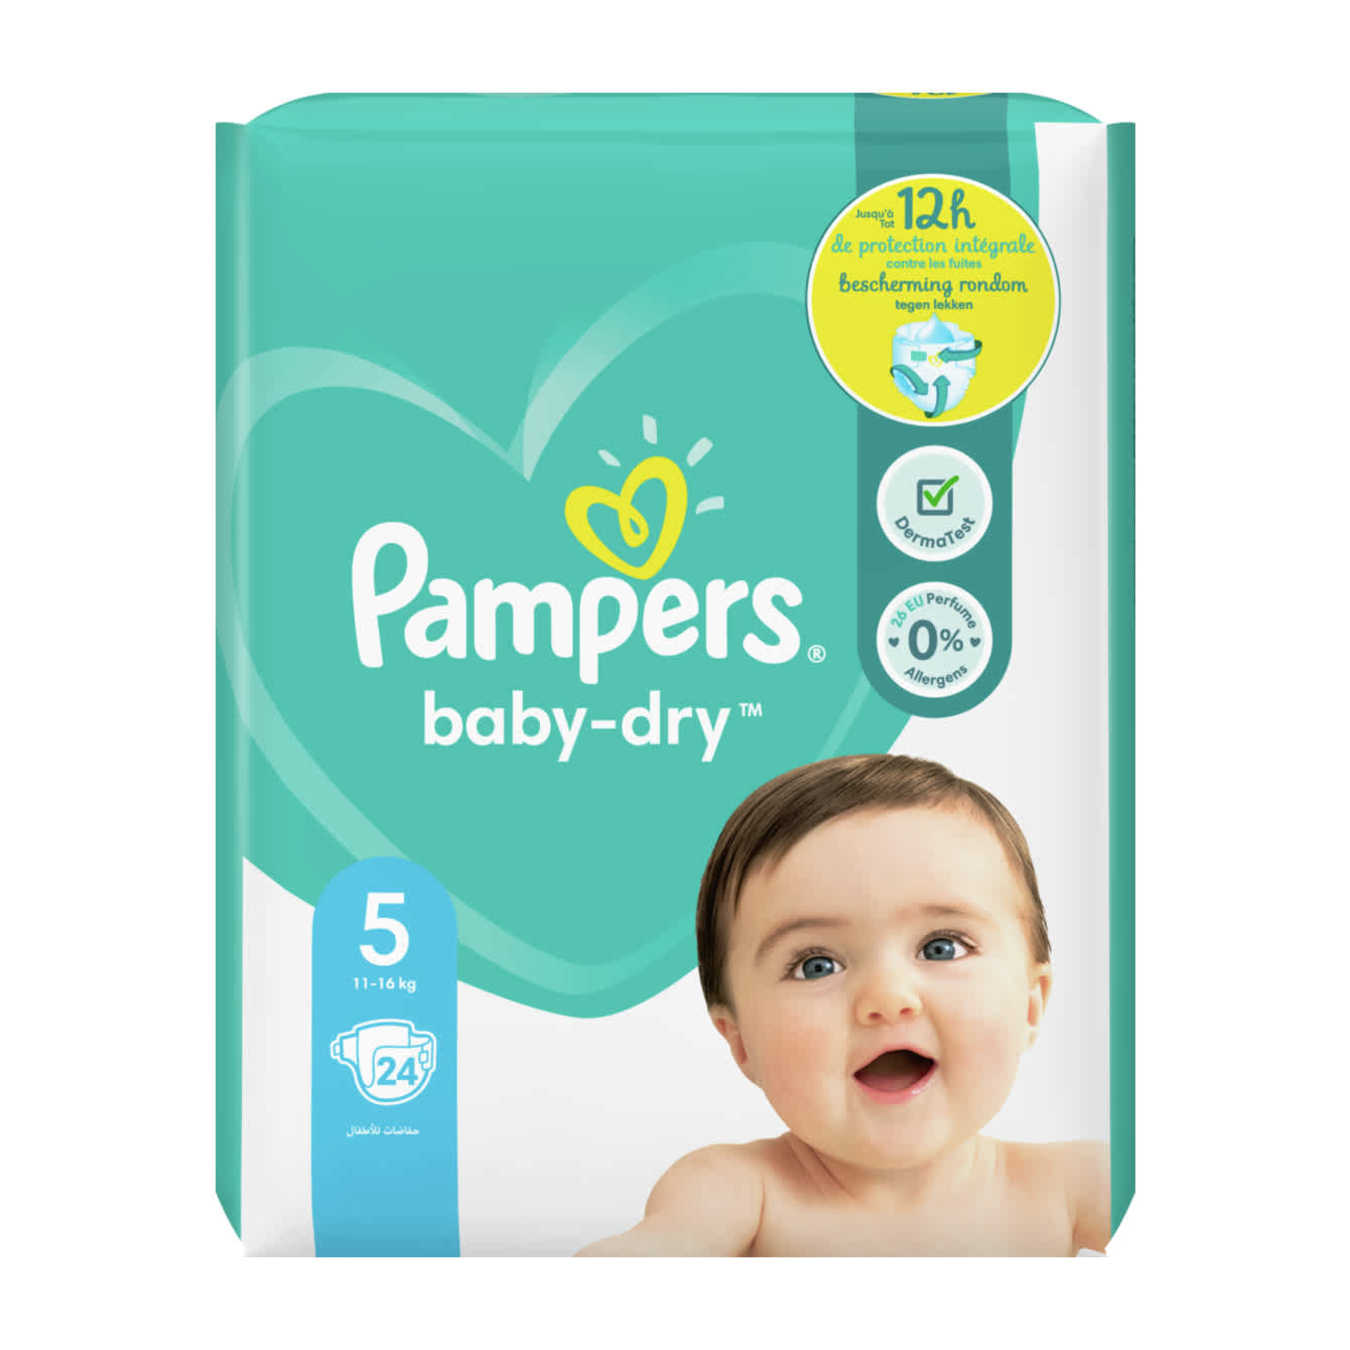 Pampers Baby-Dry luiers 5, 11-16kg online bestellen? | Coop.nl Coop